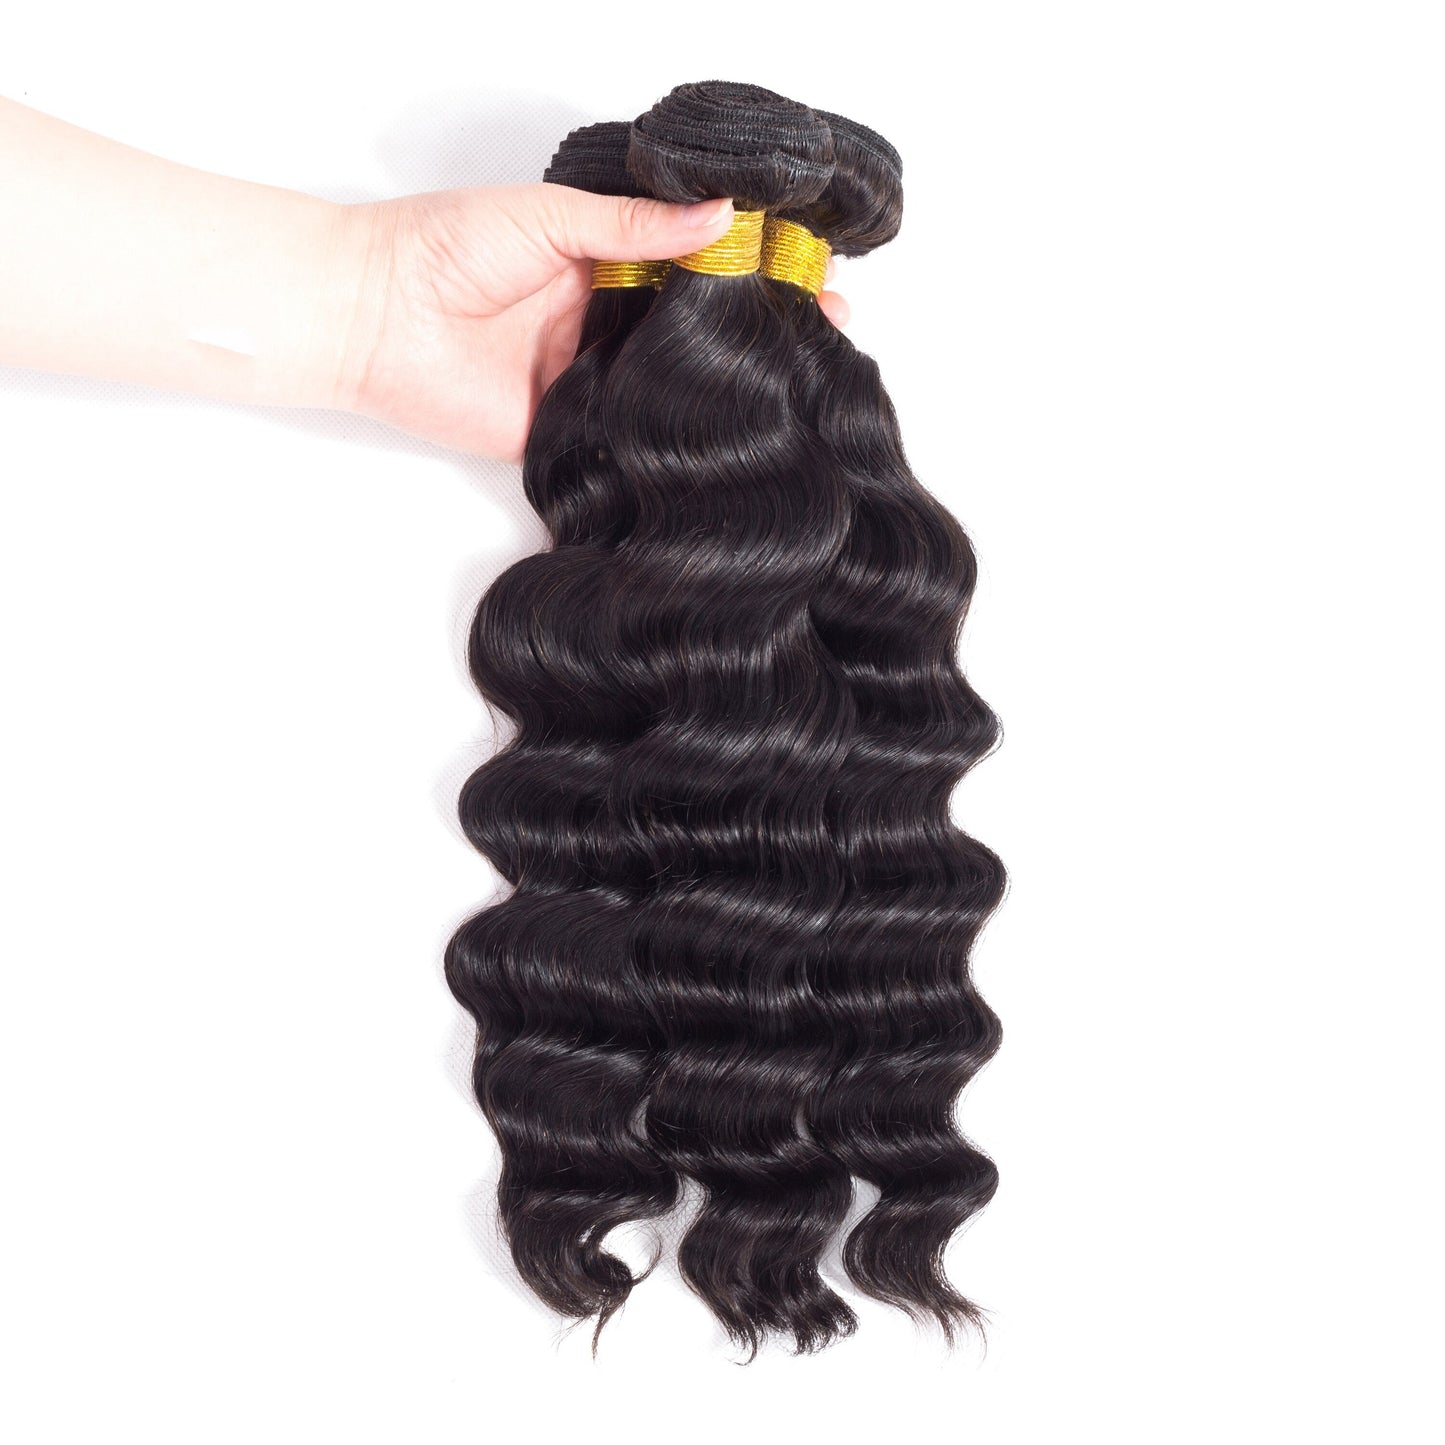 10A Grade 1/3/4 Loose Body Wave Weave Peruvian Human Hair Extension Bu